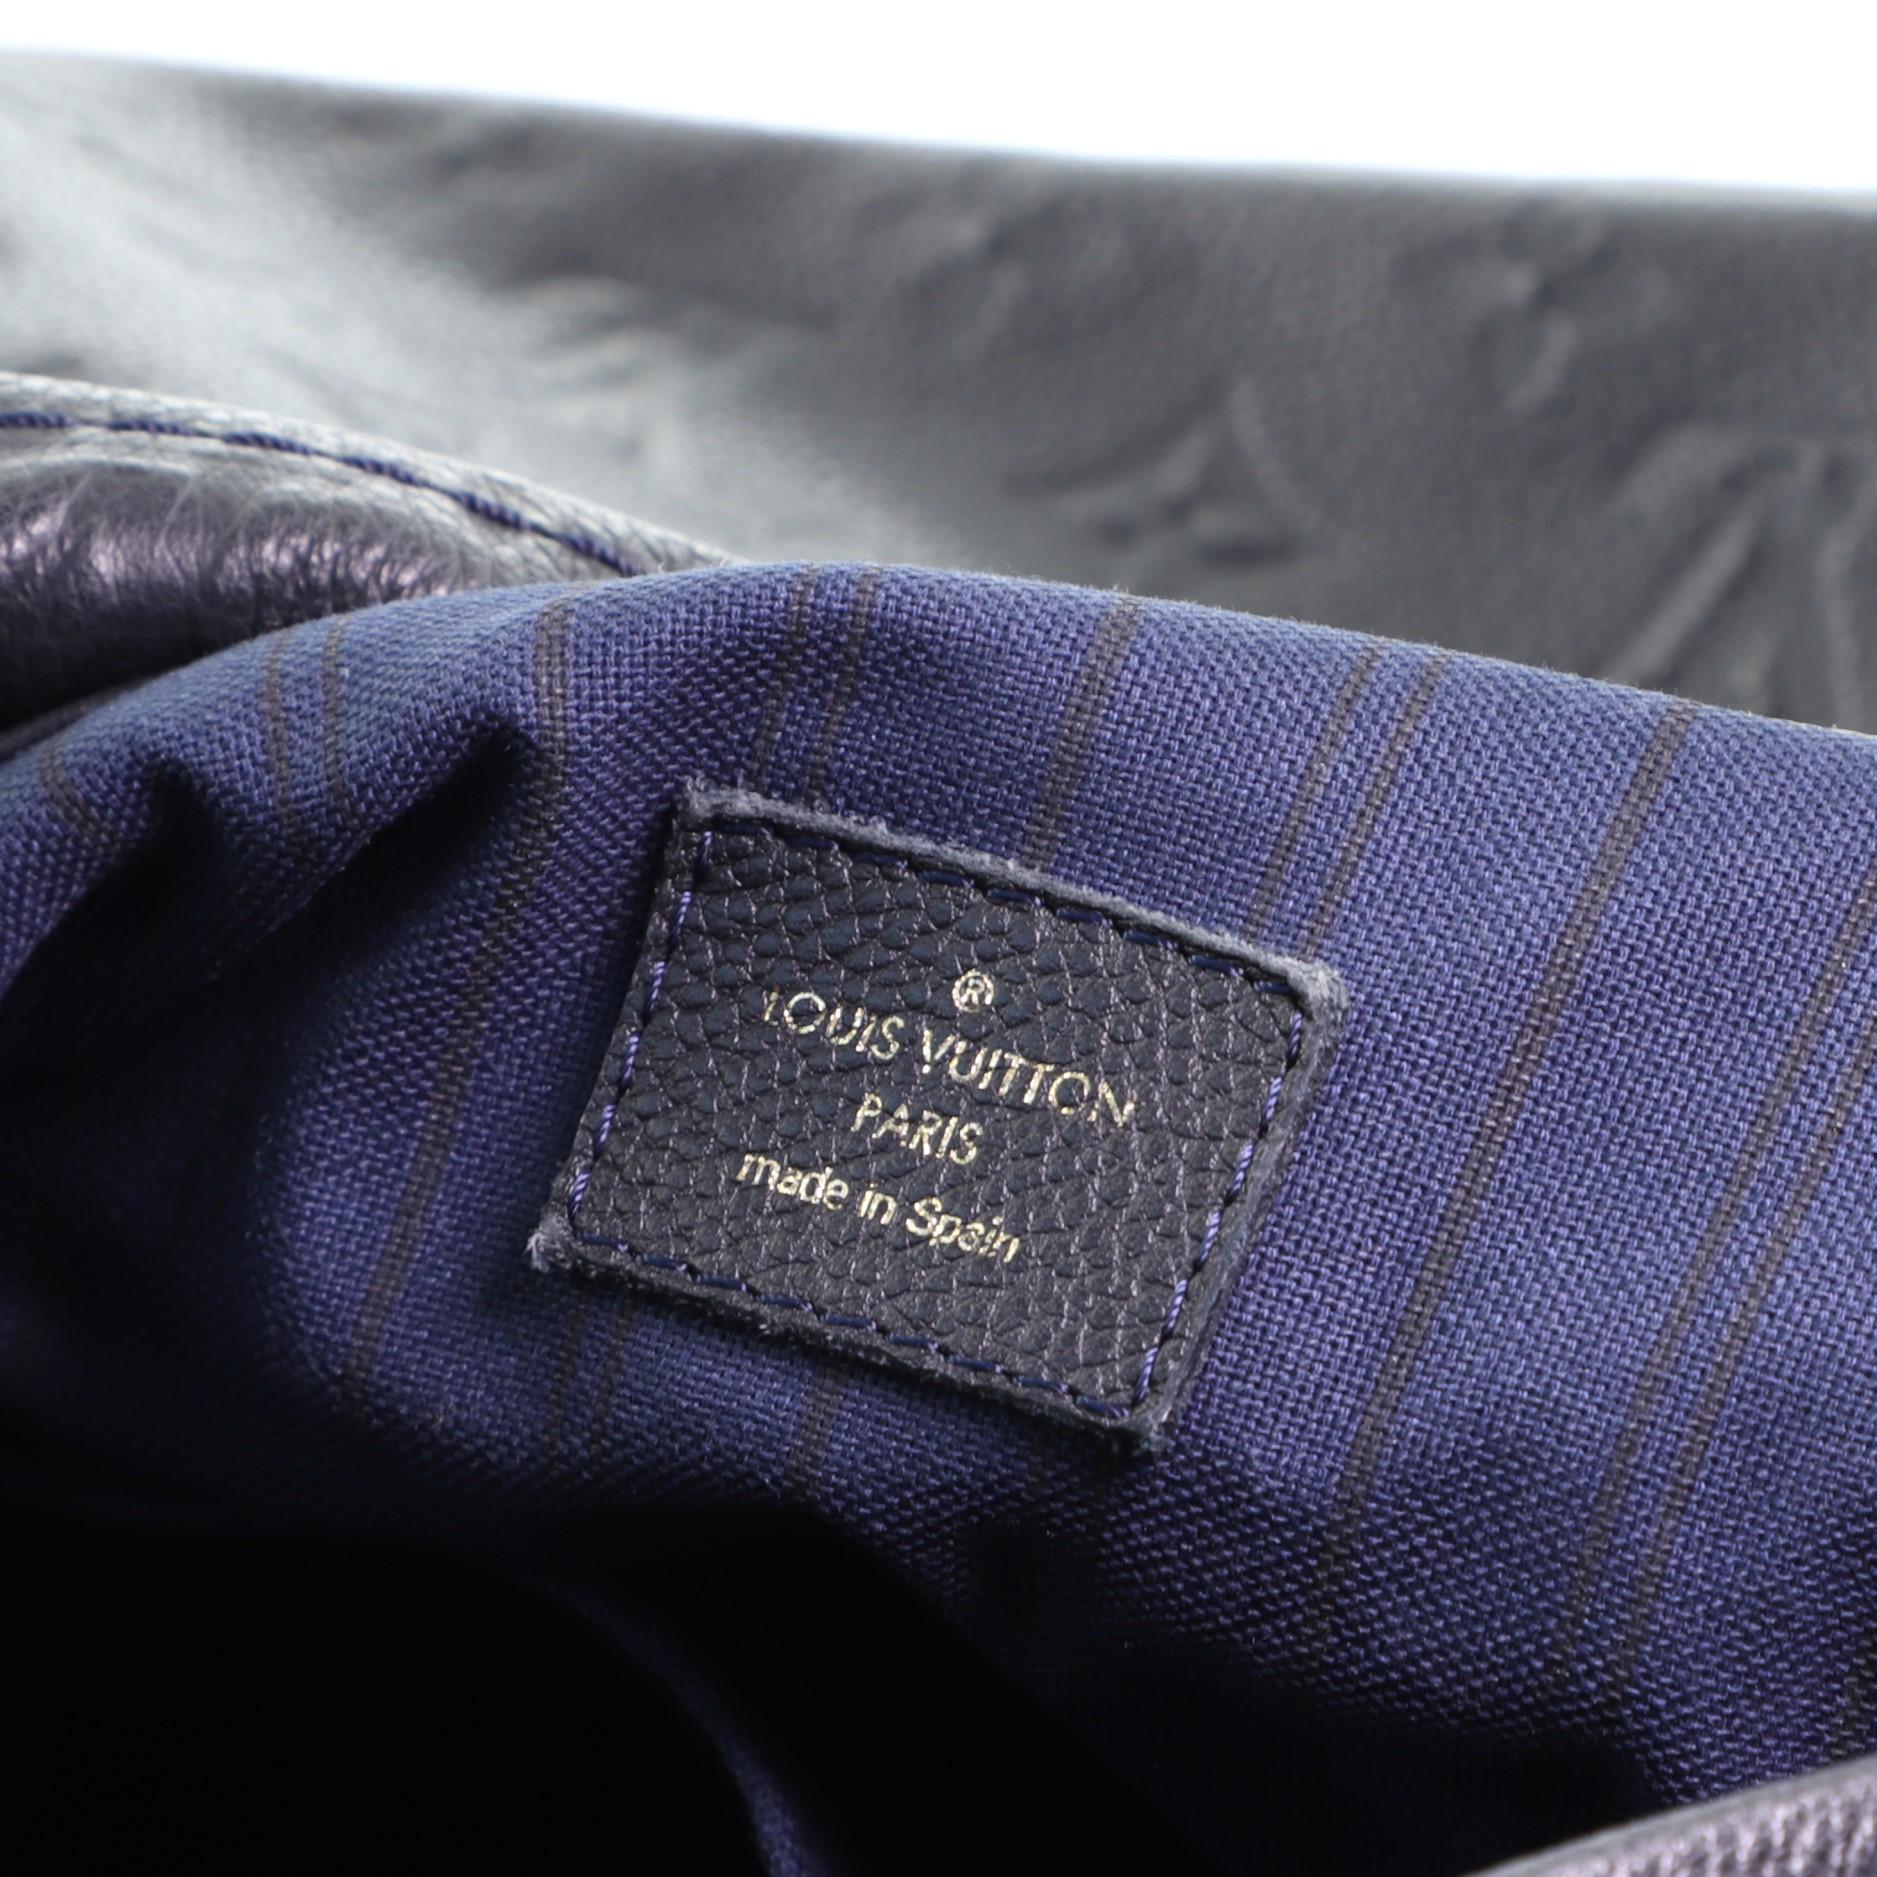 Black Louis Vuitton Artsy Handbag Monogram Empreinte Leather MM